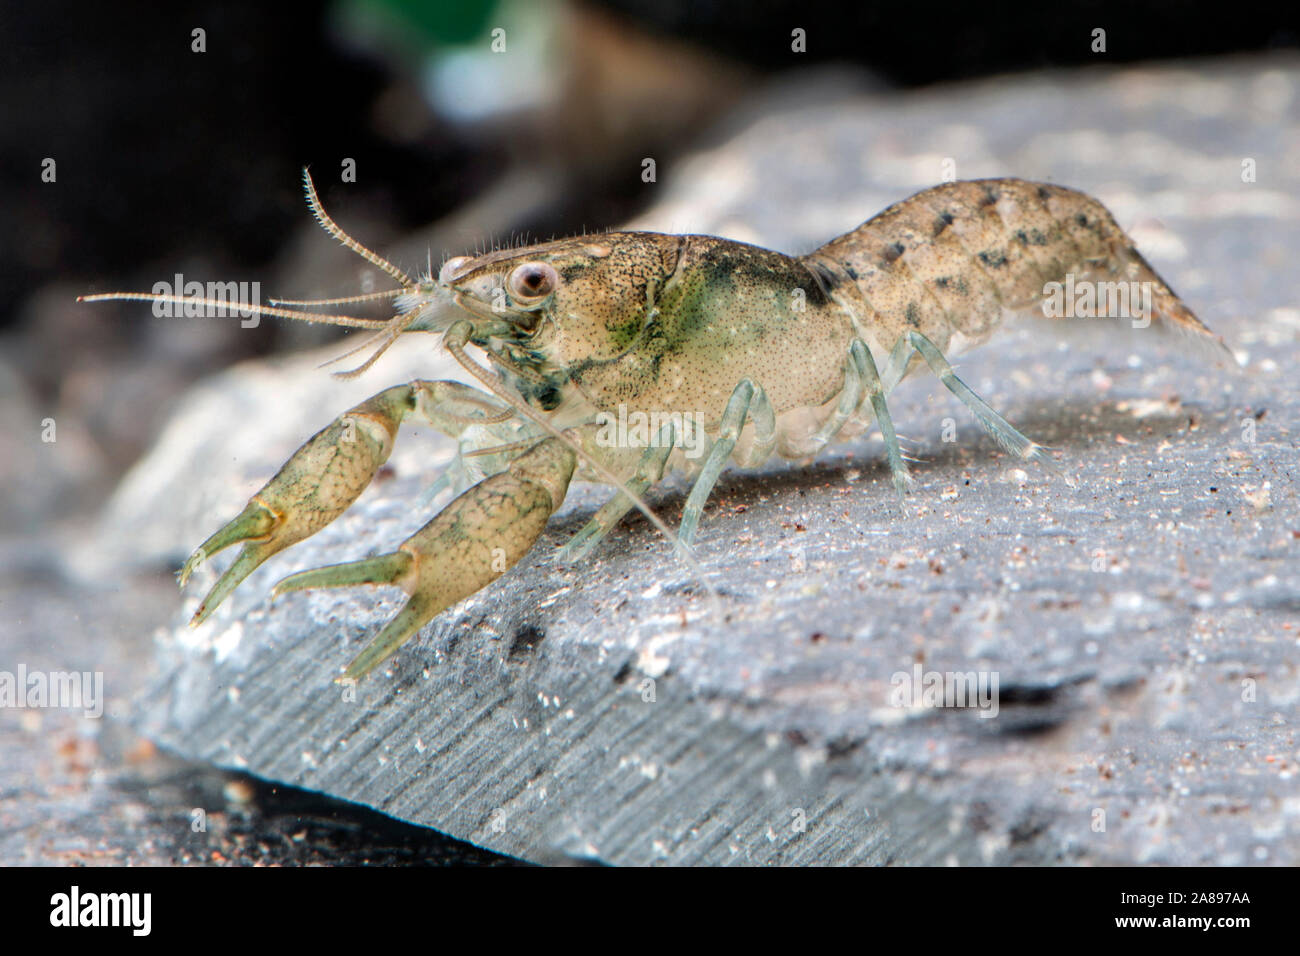 Cambarellus spec. Alabama,Zwergflusskrebs,Dwarf Crayfish Stock Photo